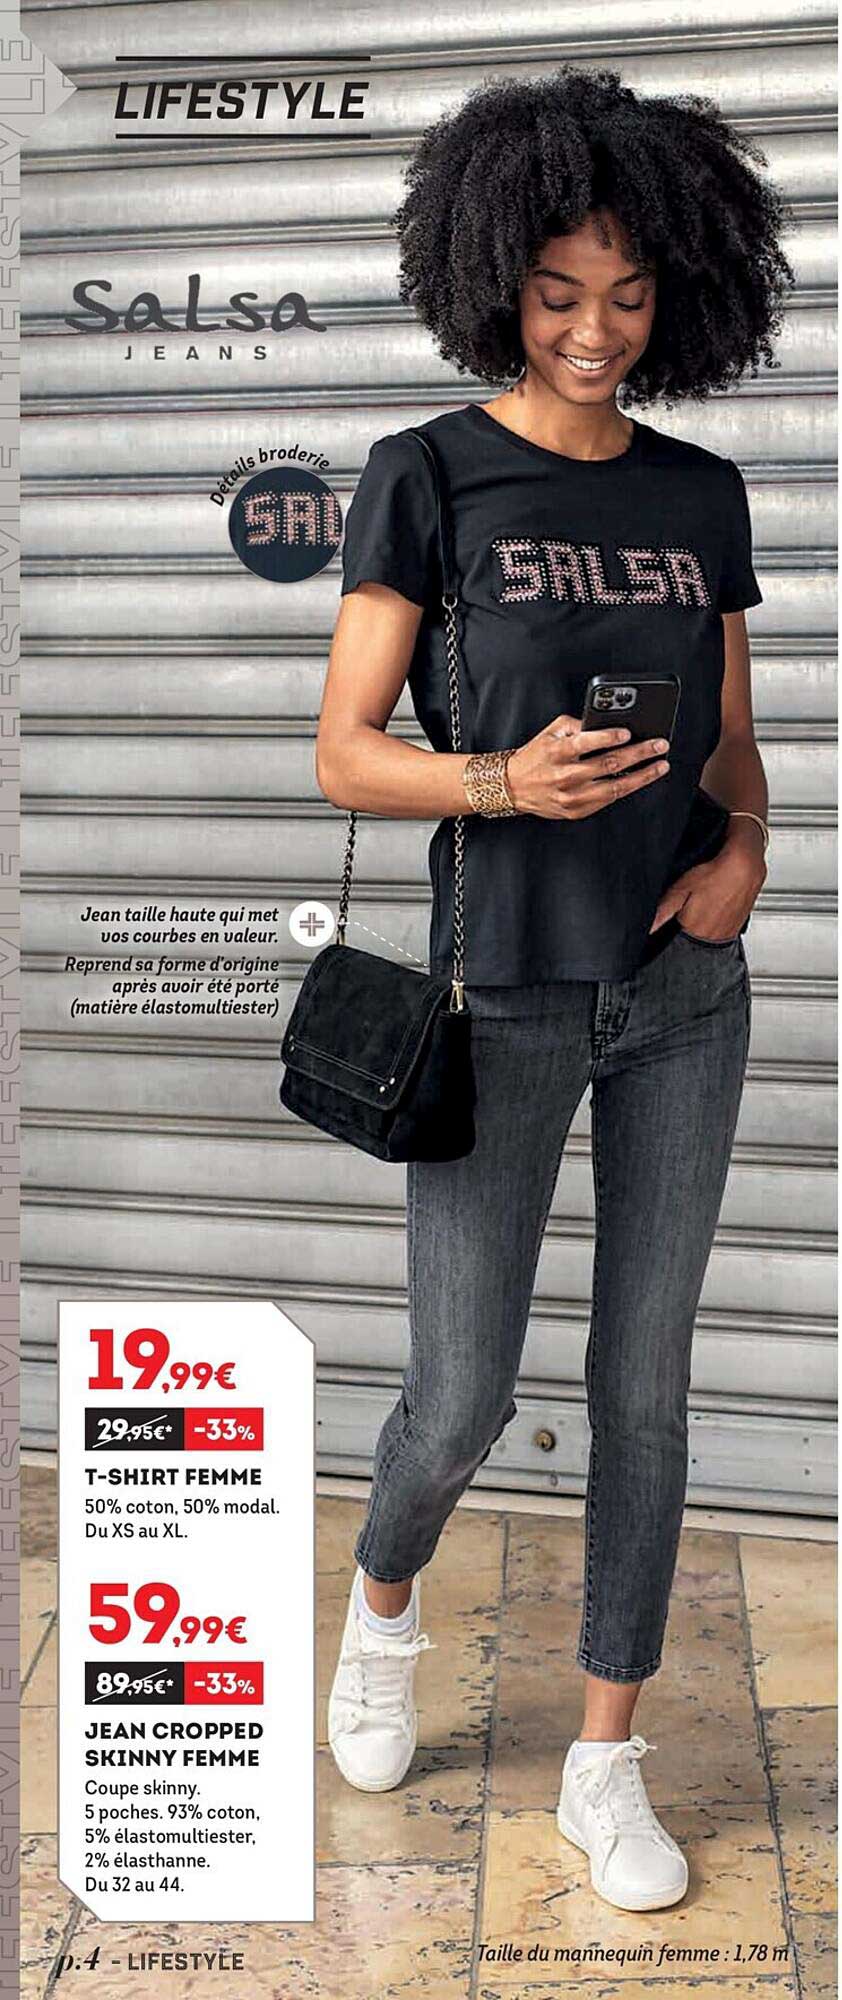 Sport 2000 T-shirt Femme Salsa Jeans, Jean Cropped Skinny Femme Salsa Jeans